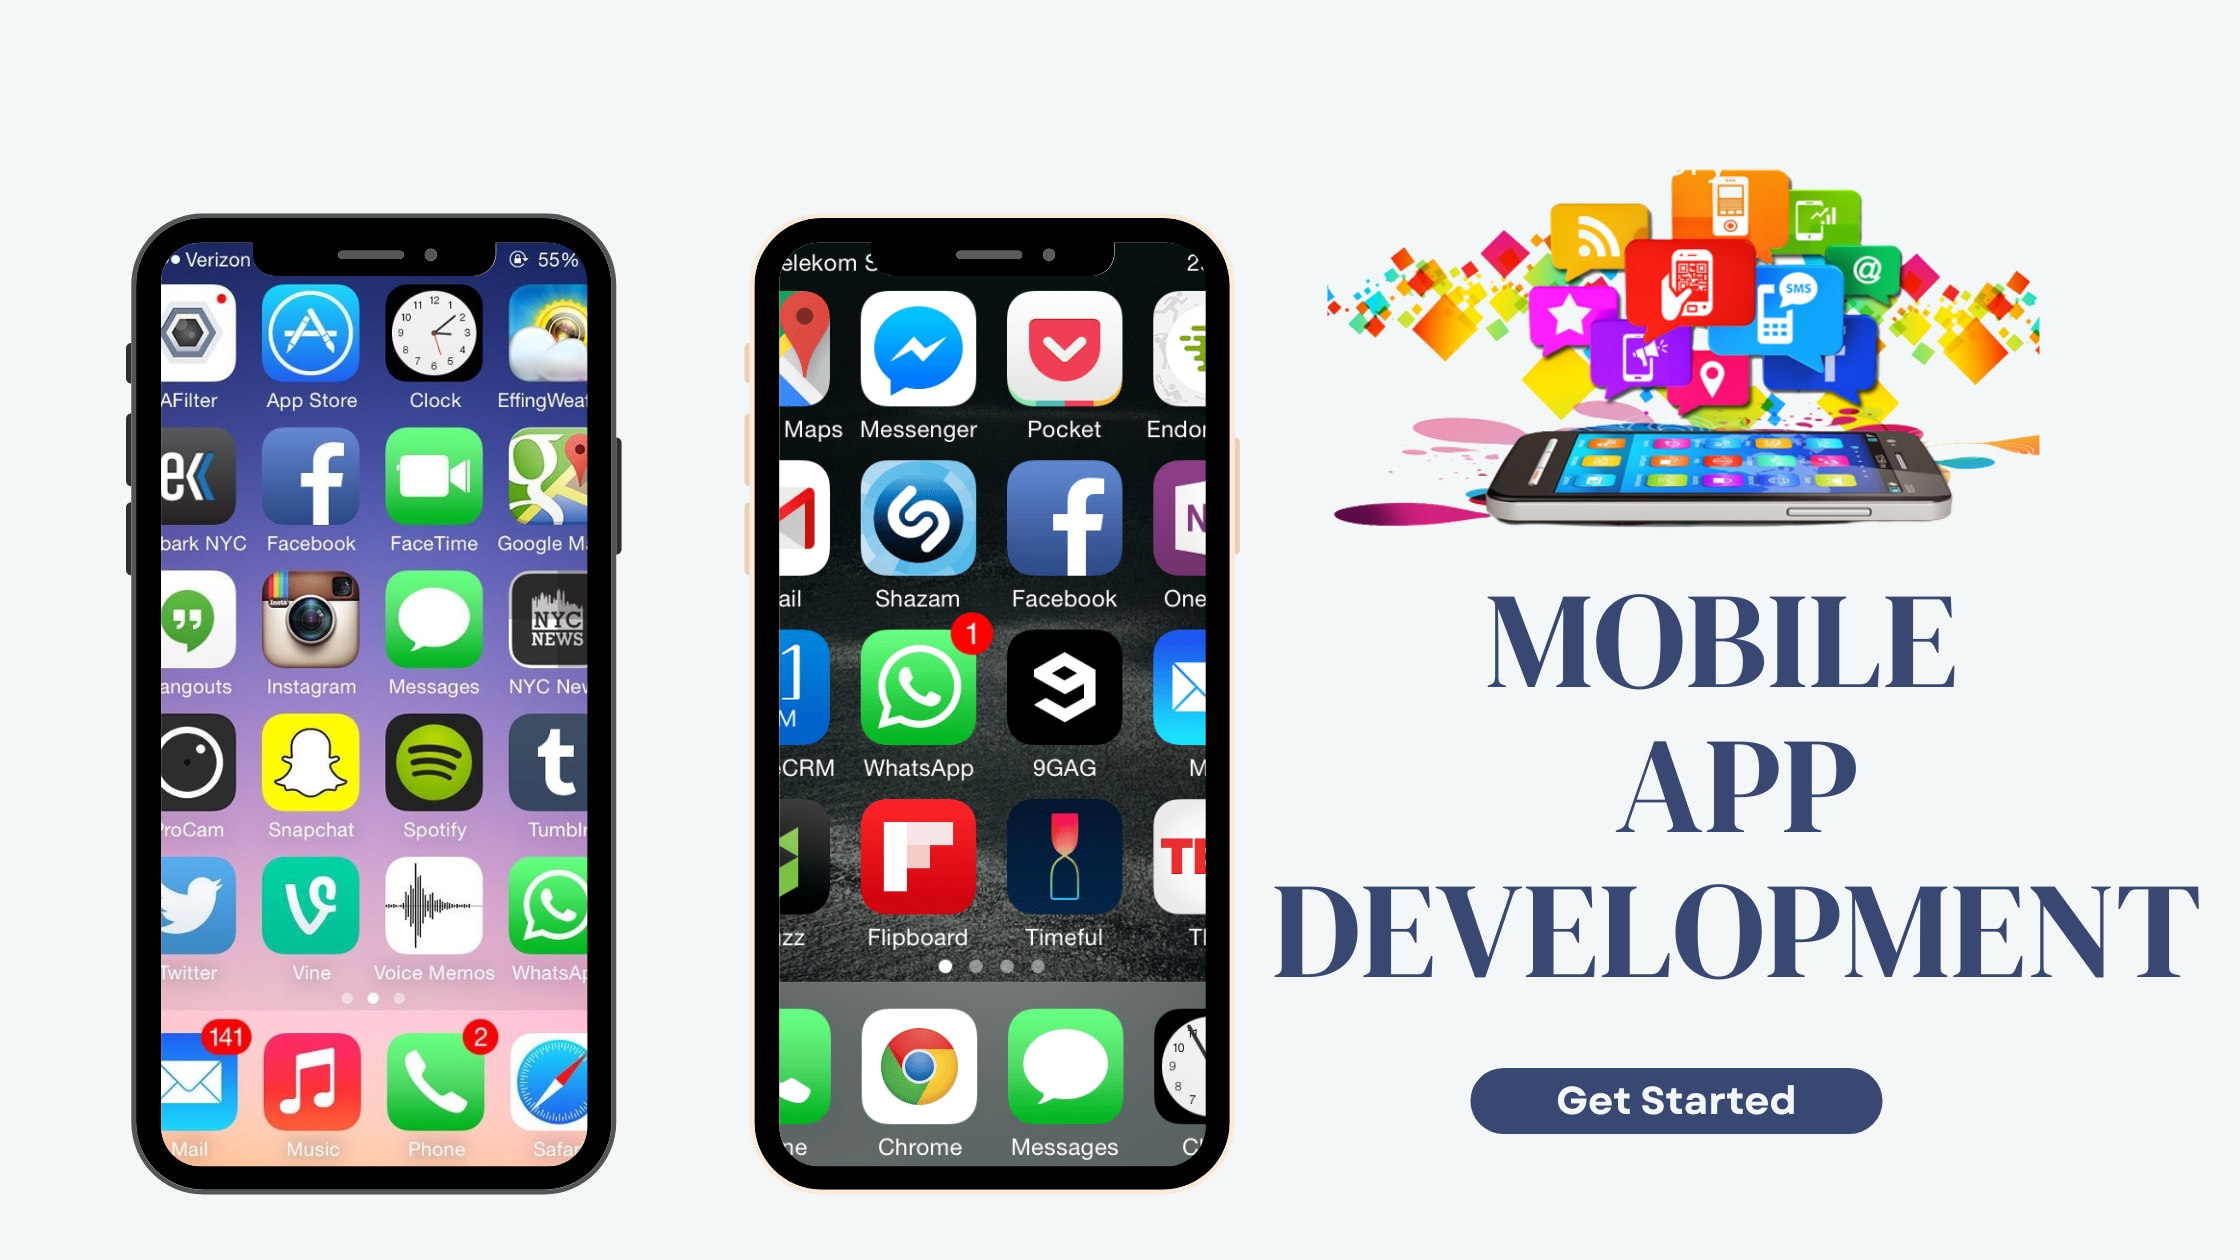 Mobile App Development: a top tech skill in demand